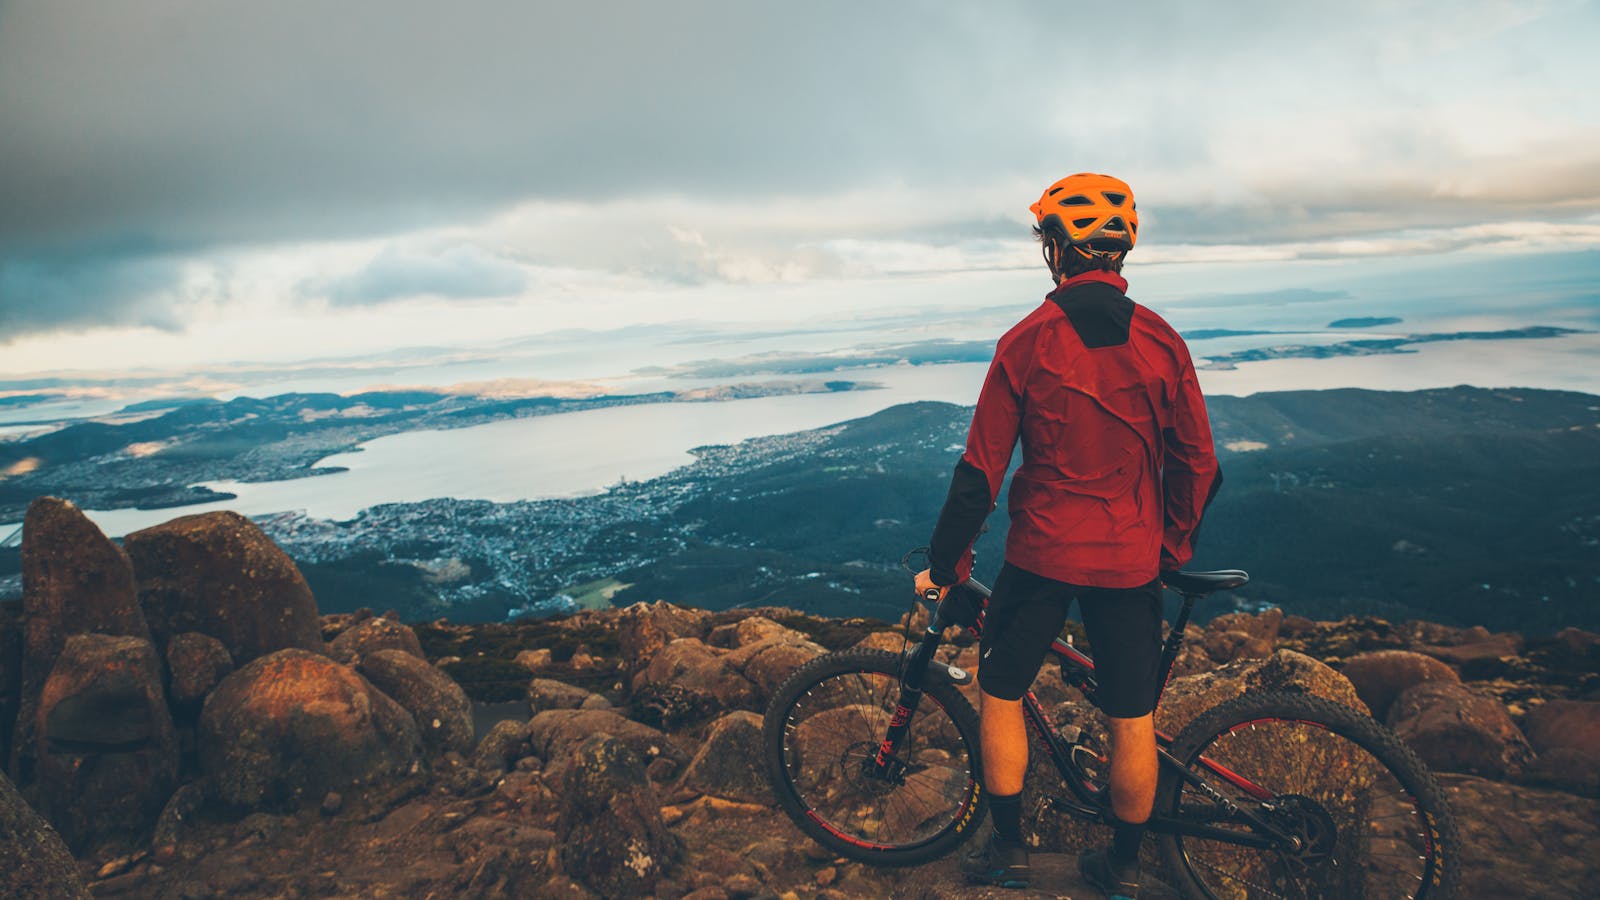 We can get you mountain biking on the many trails of Mt Wellington / kunanyi near Hobart